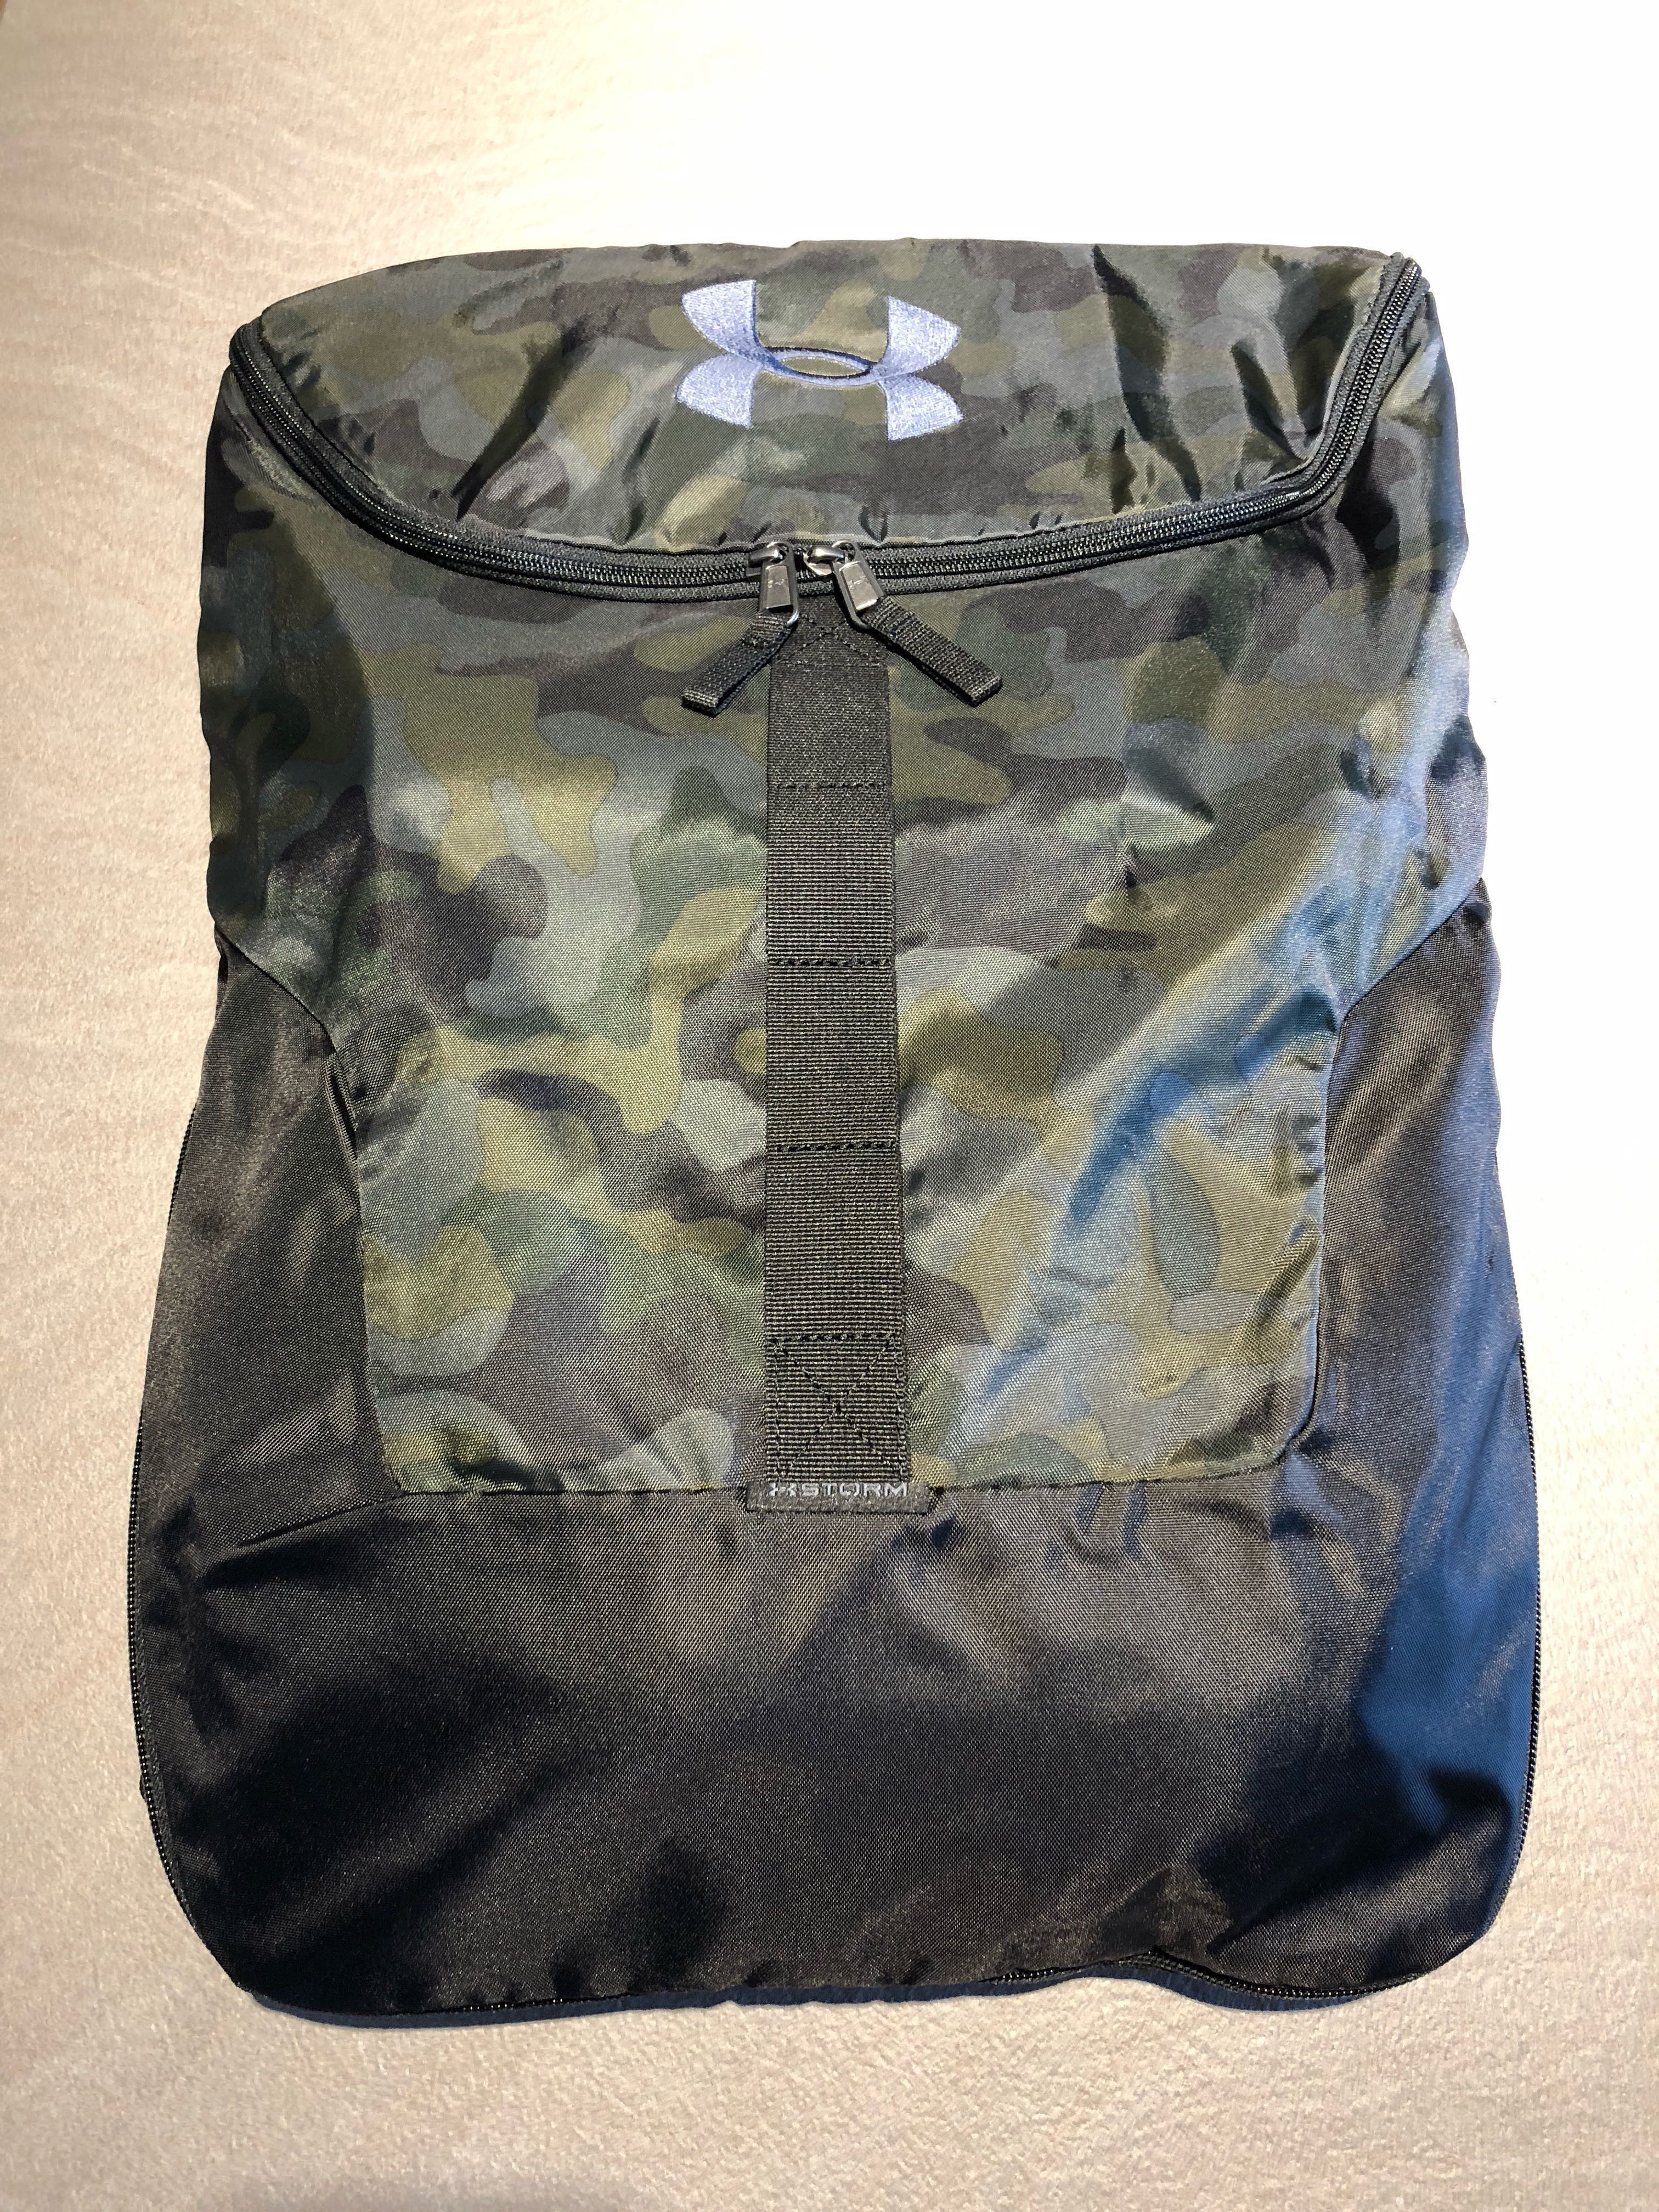 under armour camo backpacks